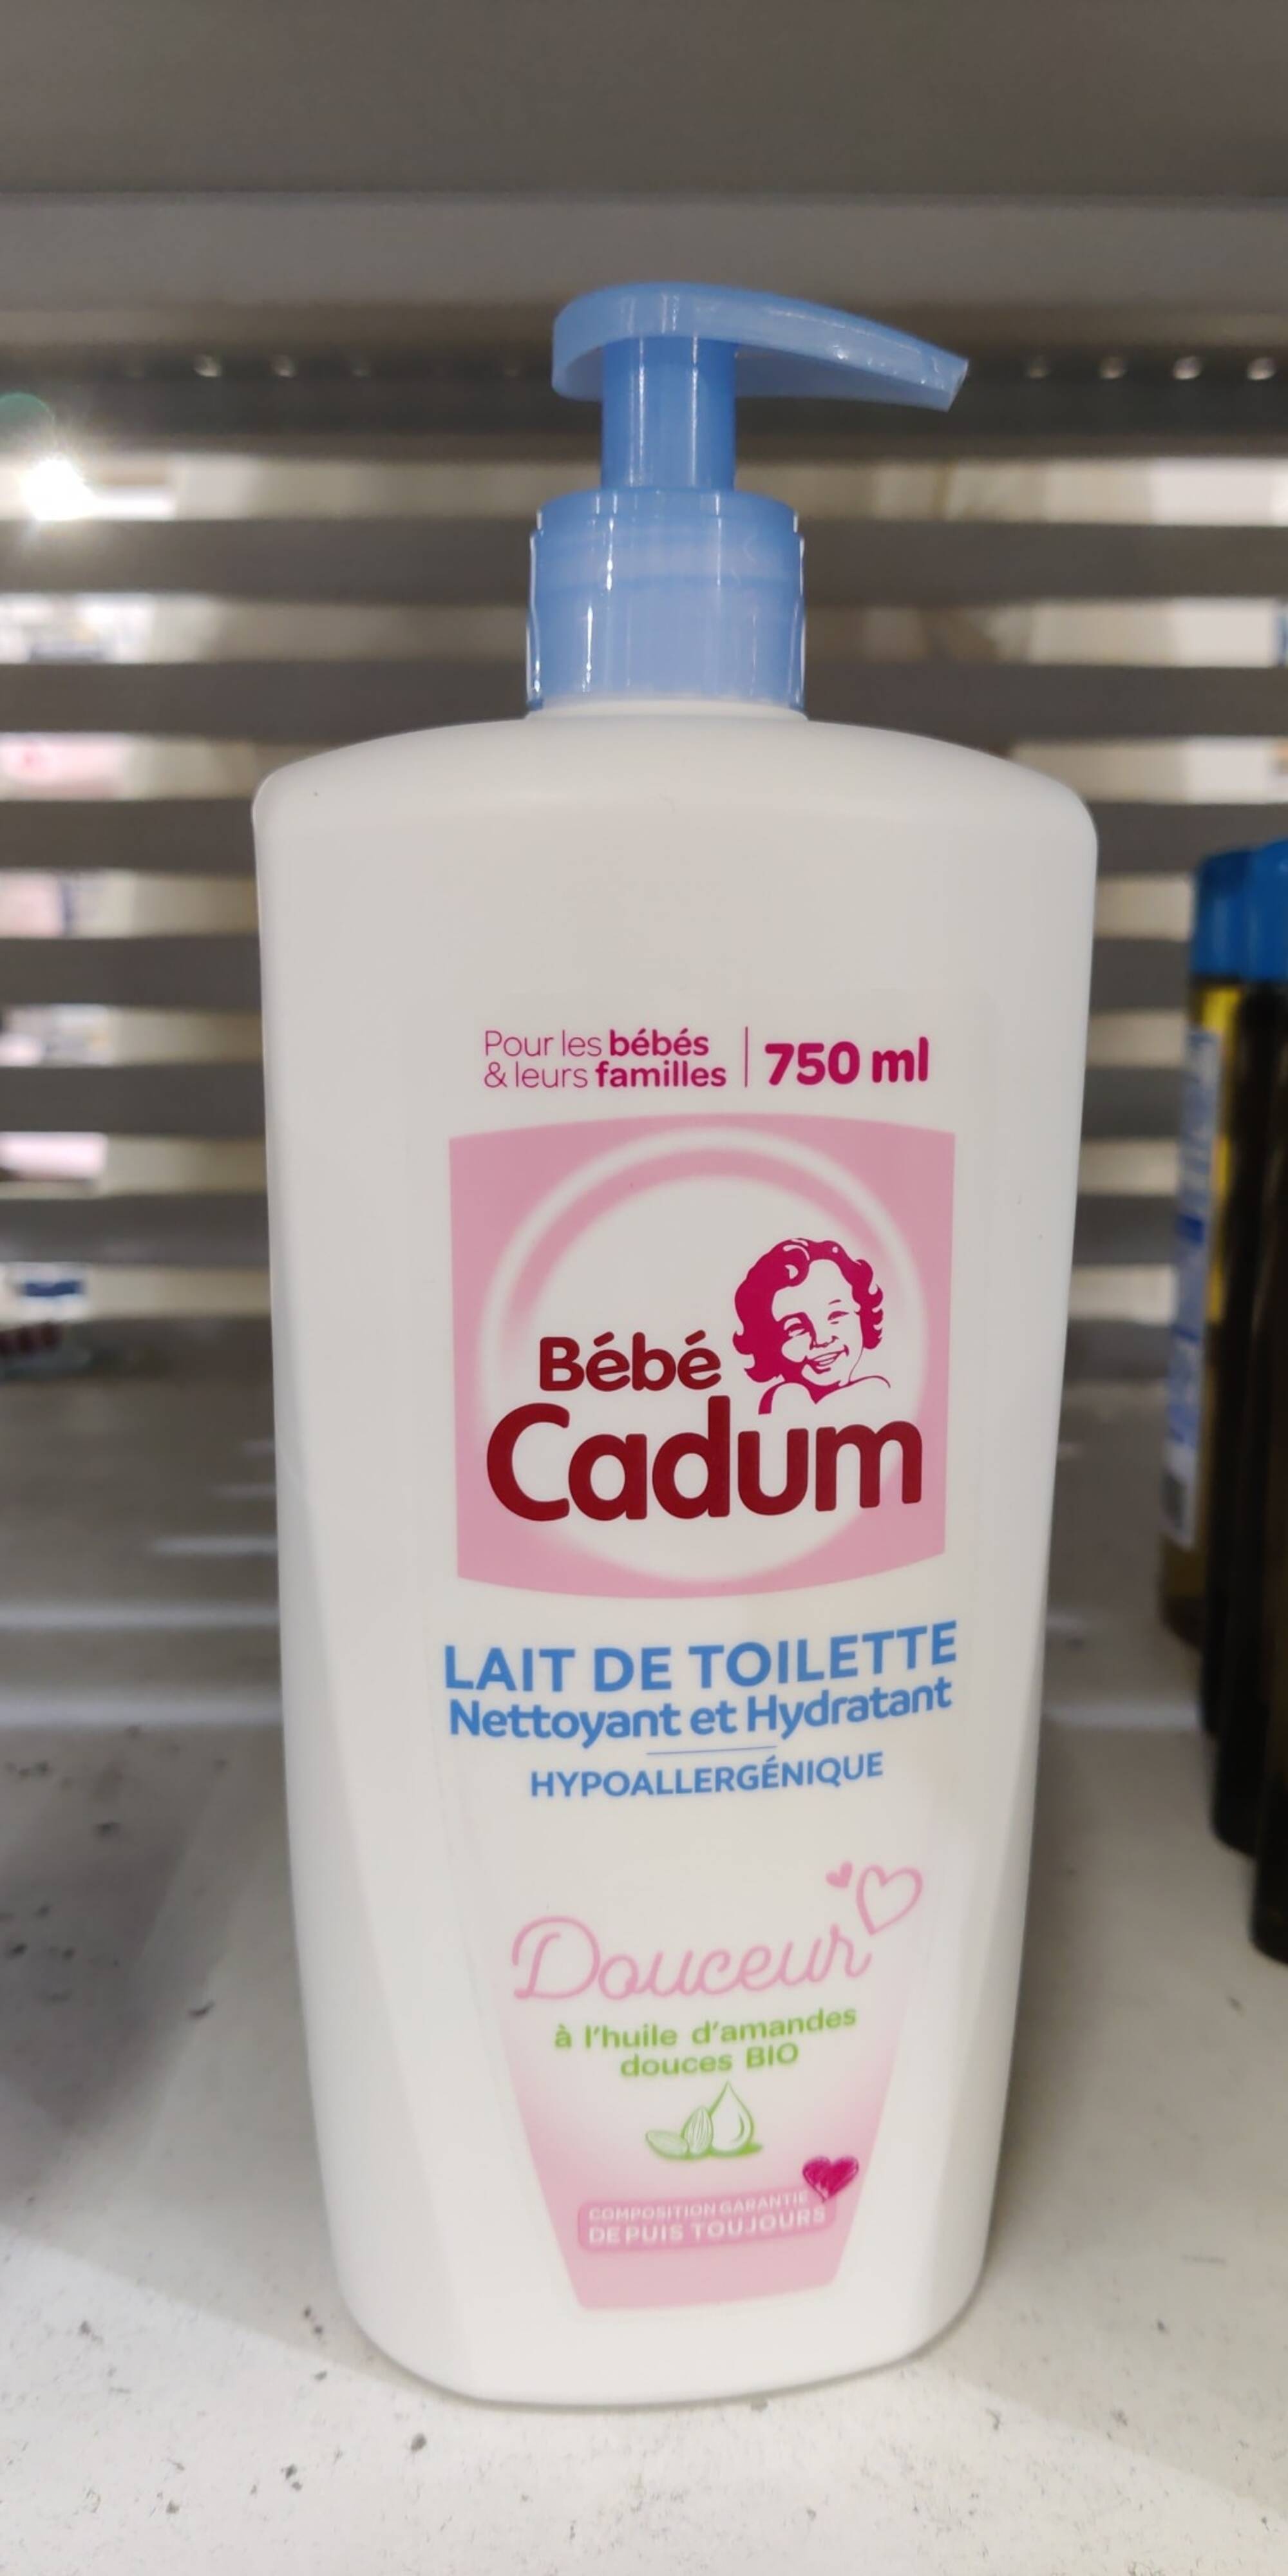 Duo soins bébé cadum - Bébé Cadum